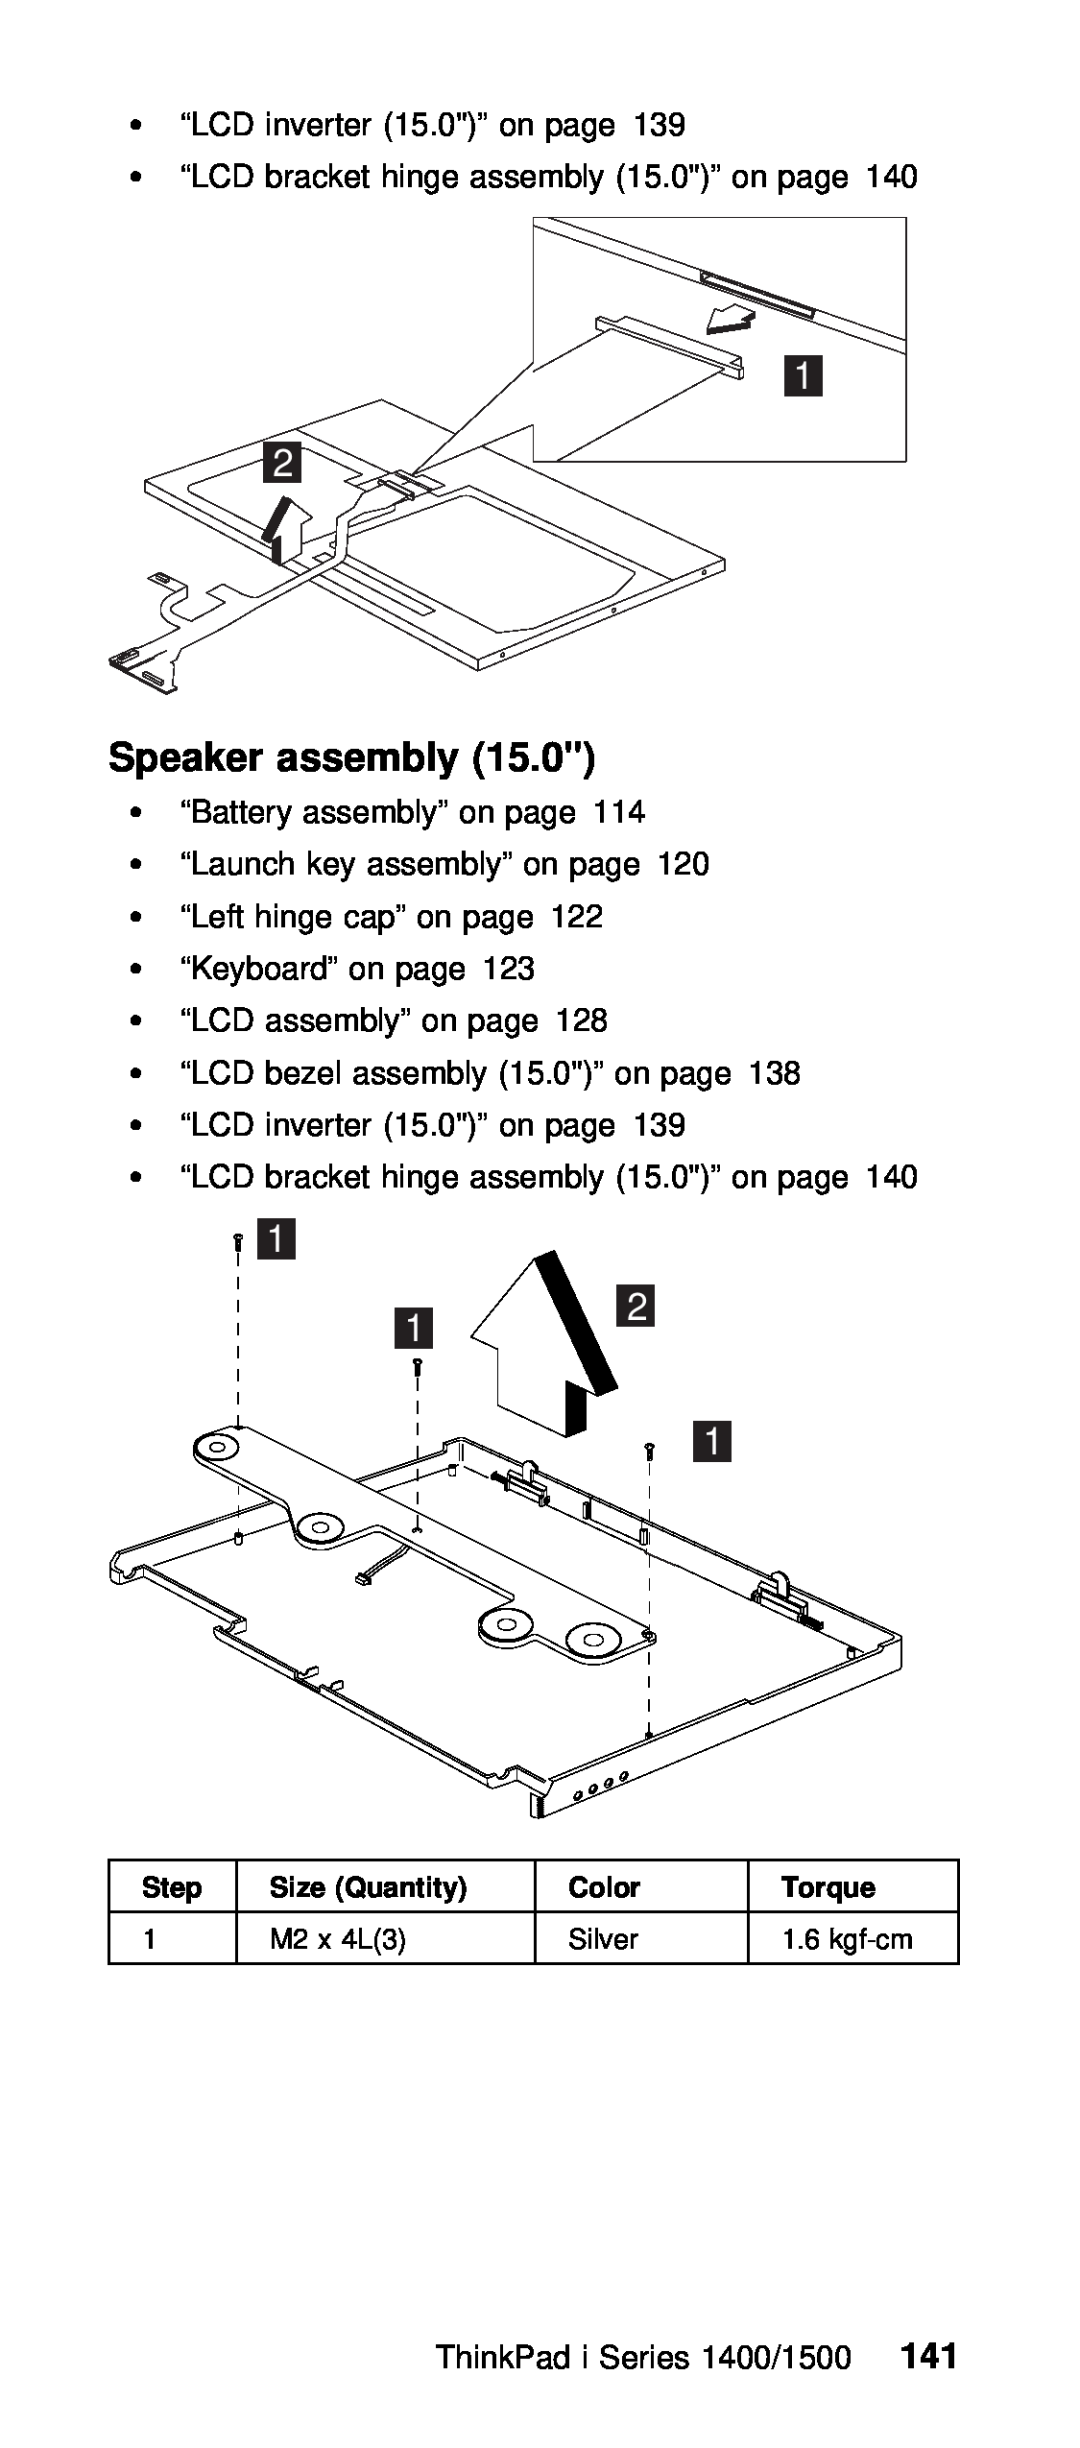 IBM Series 1400, Series 1500 manual 15.0, Speaker assembly 